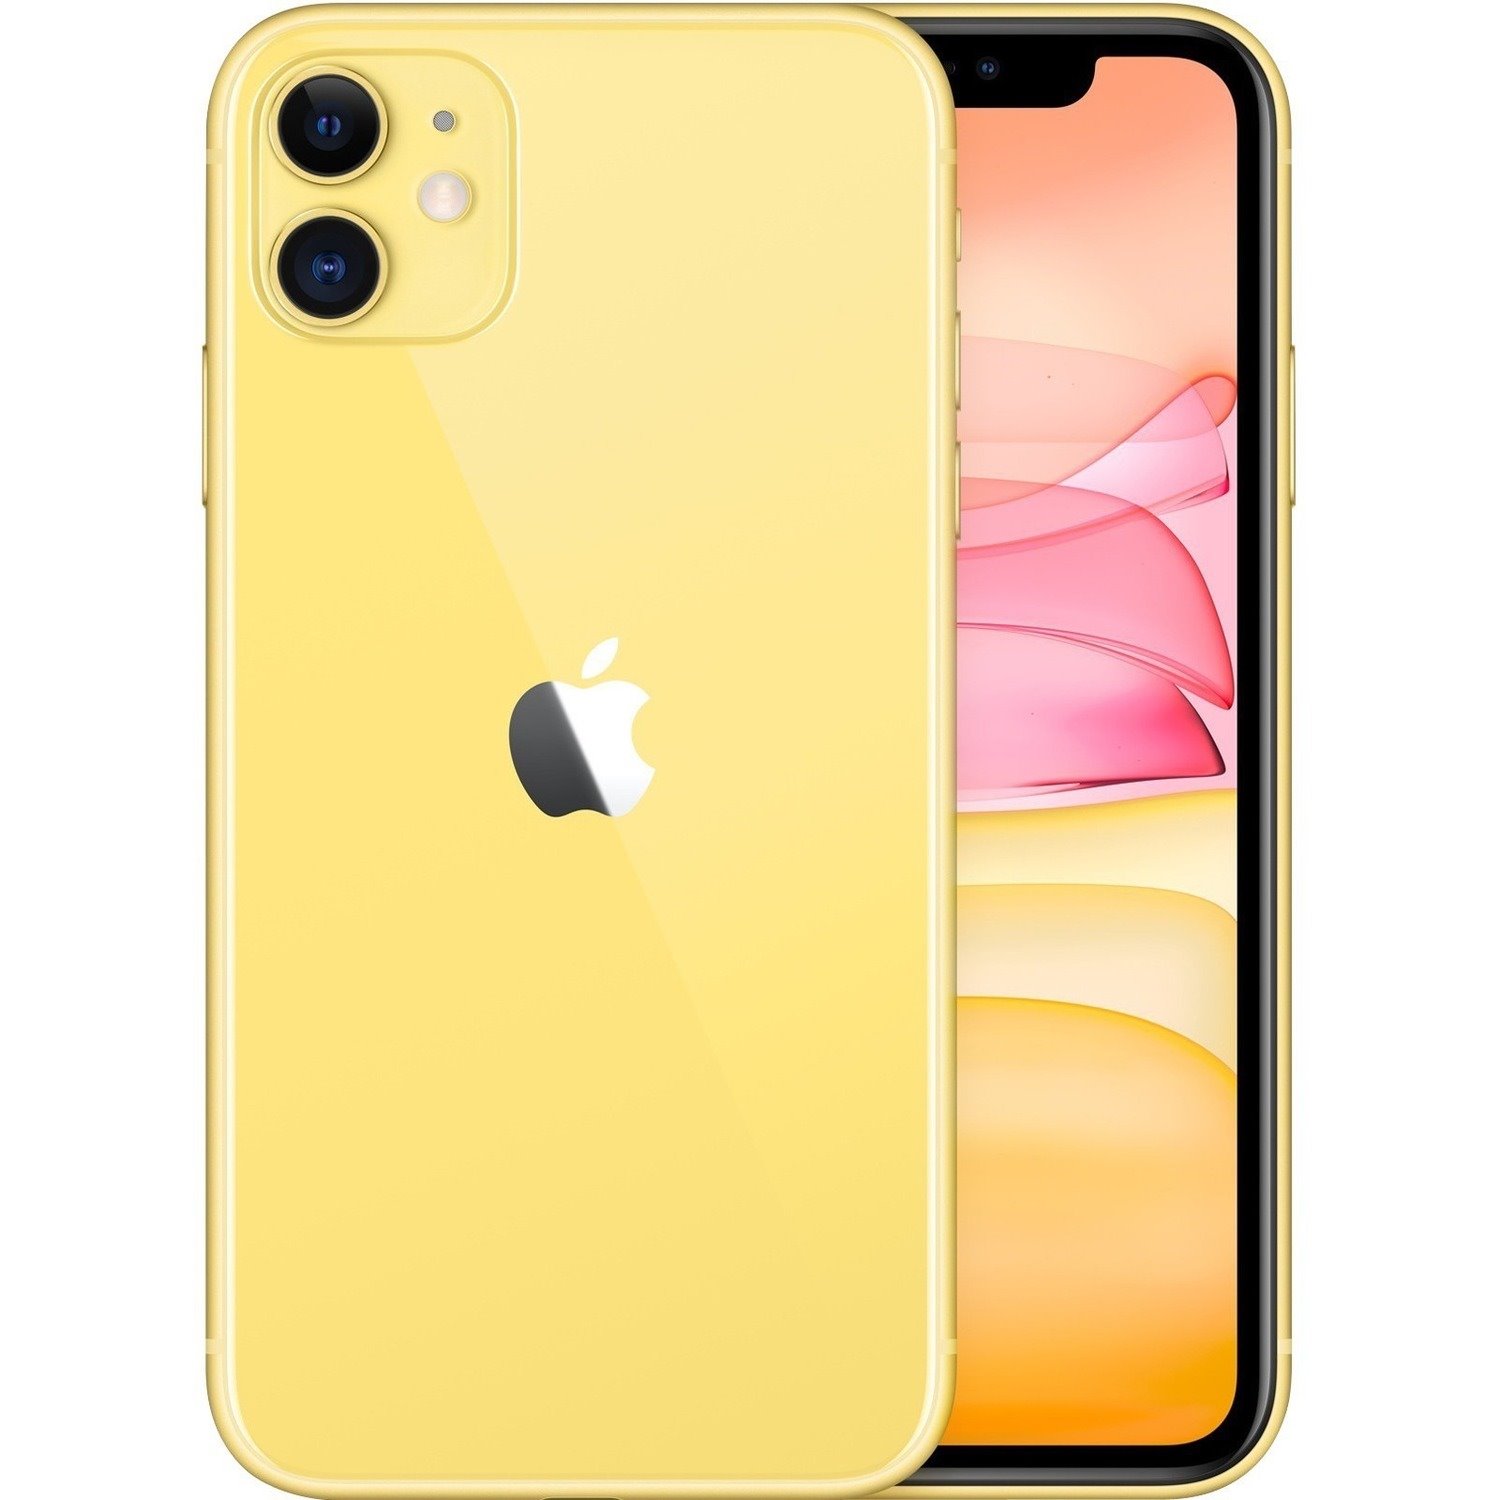 Apple Apple iPhone 11 128 GB Smartphone - 6.1" LCD 1792 x 828 - Hexa-core (LightningDual-core (2 Core) 2.65 GHz + Thunder Quad-core (4 Core) 1.80 GHz - 4 GB RAM - iOS 14 - 4G - Yellow